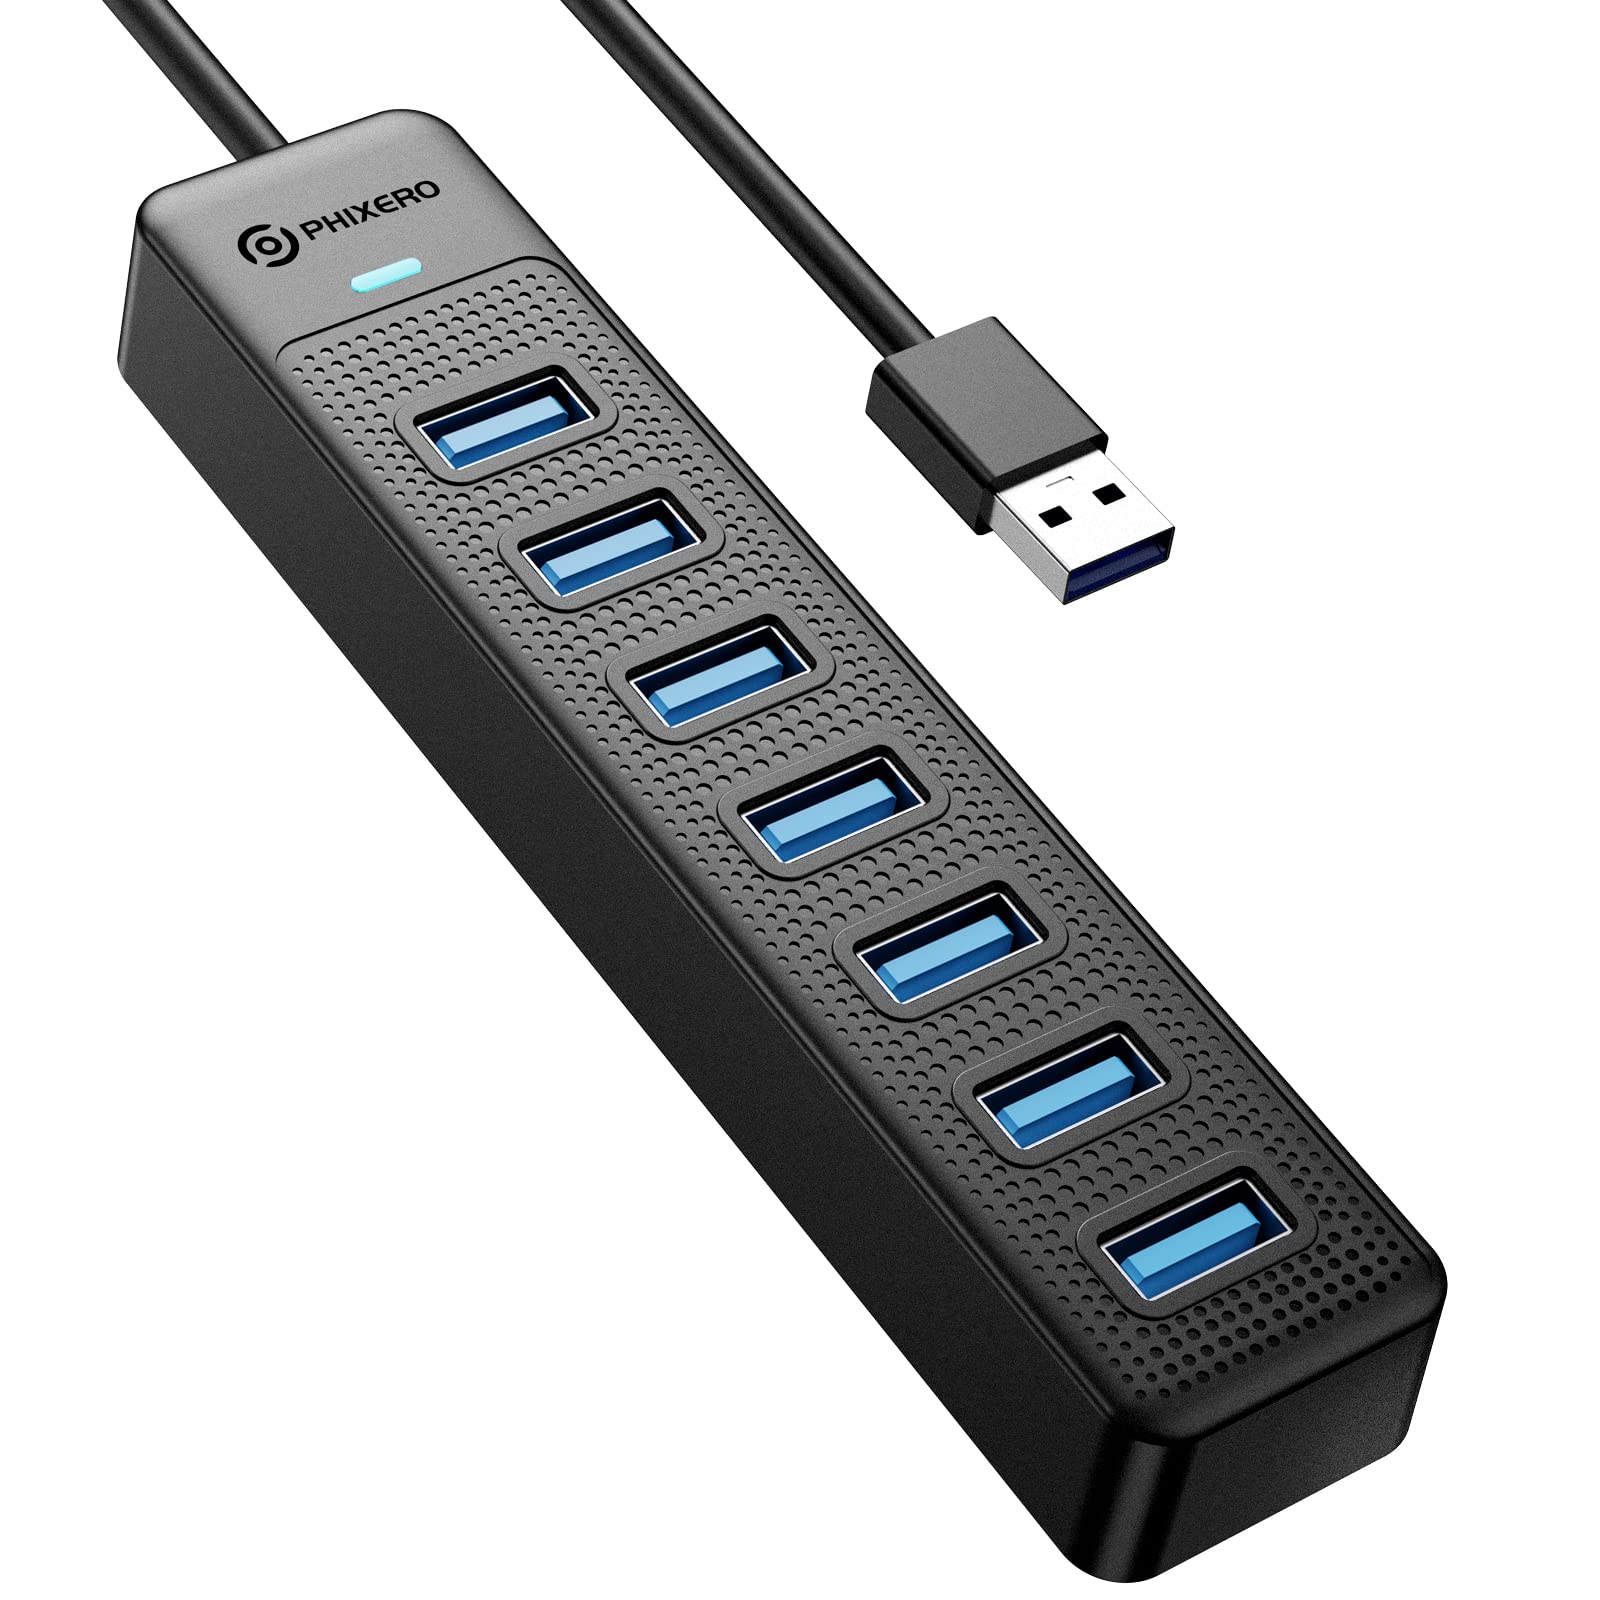 USB-Hub, PHIXERO 7 Port USB 3.0 Hub Multi USB Port Expander, schnelle Datenübertragung USB Splitter für Laptop, kompatibel mit allen USB-Port-Geräten